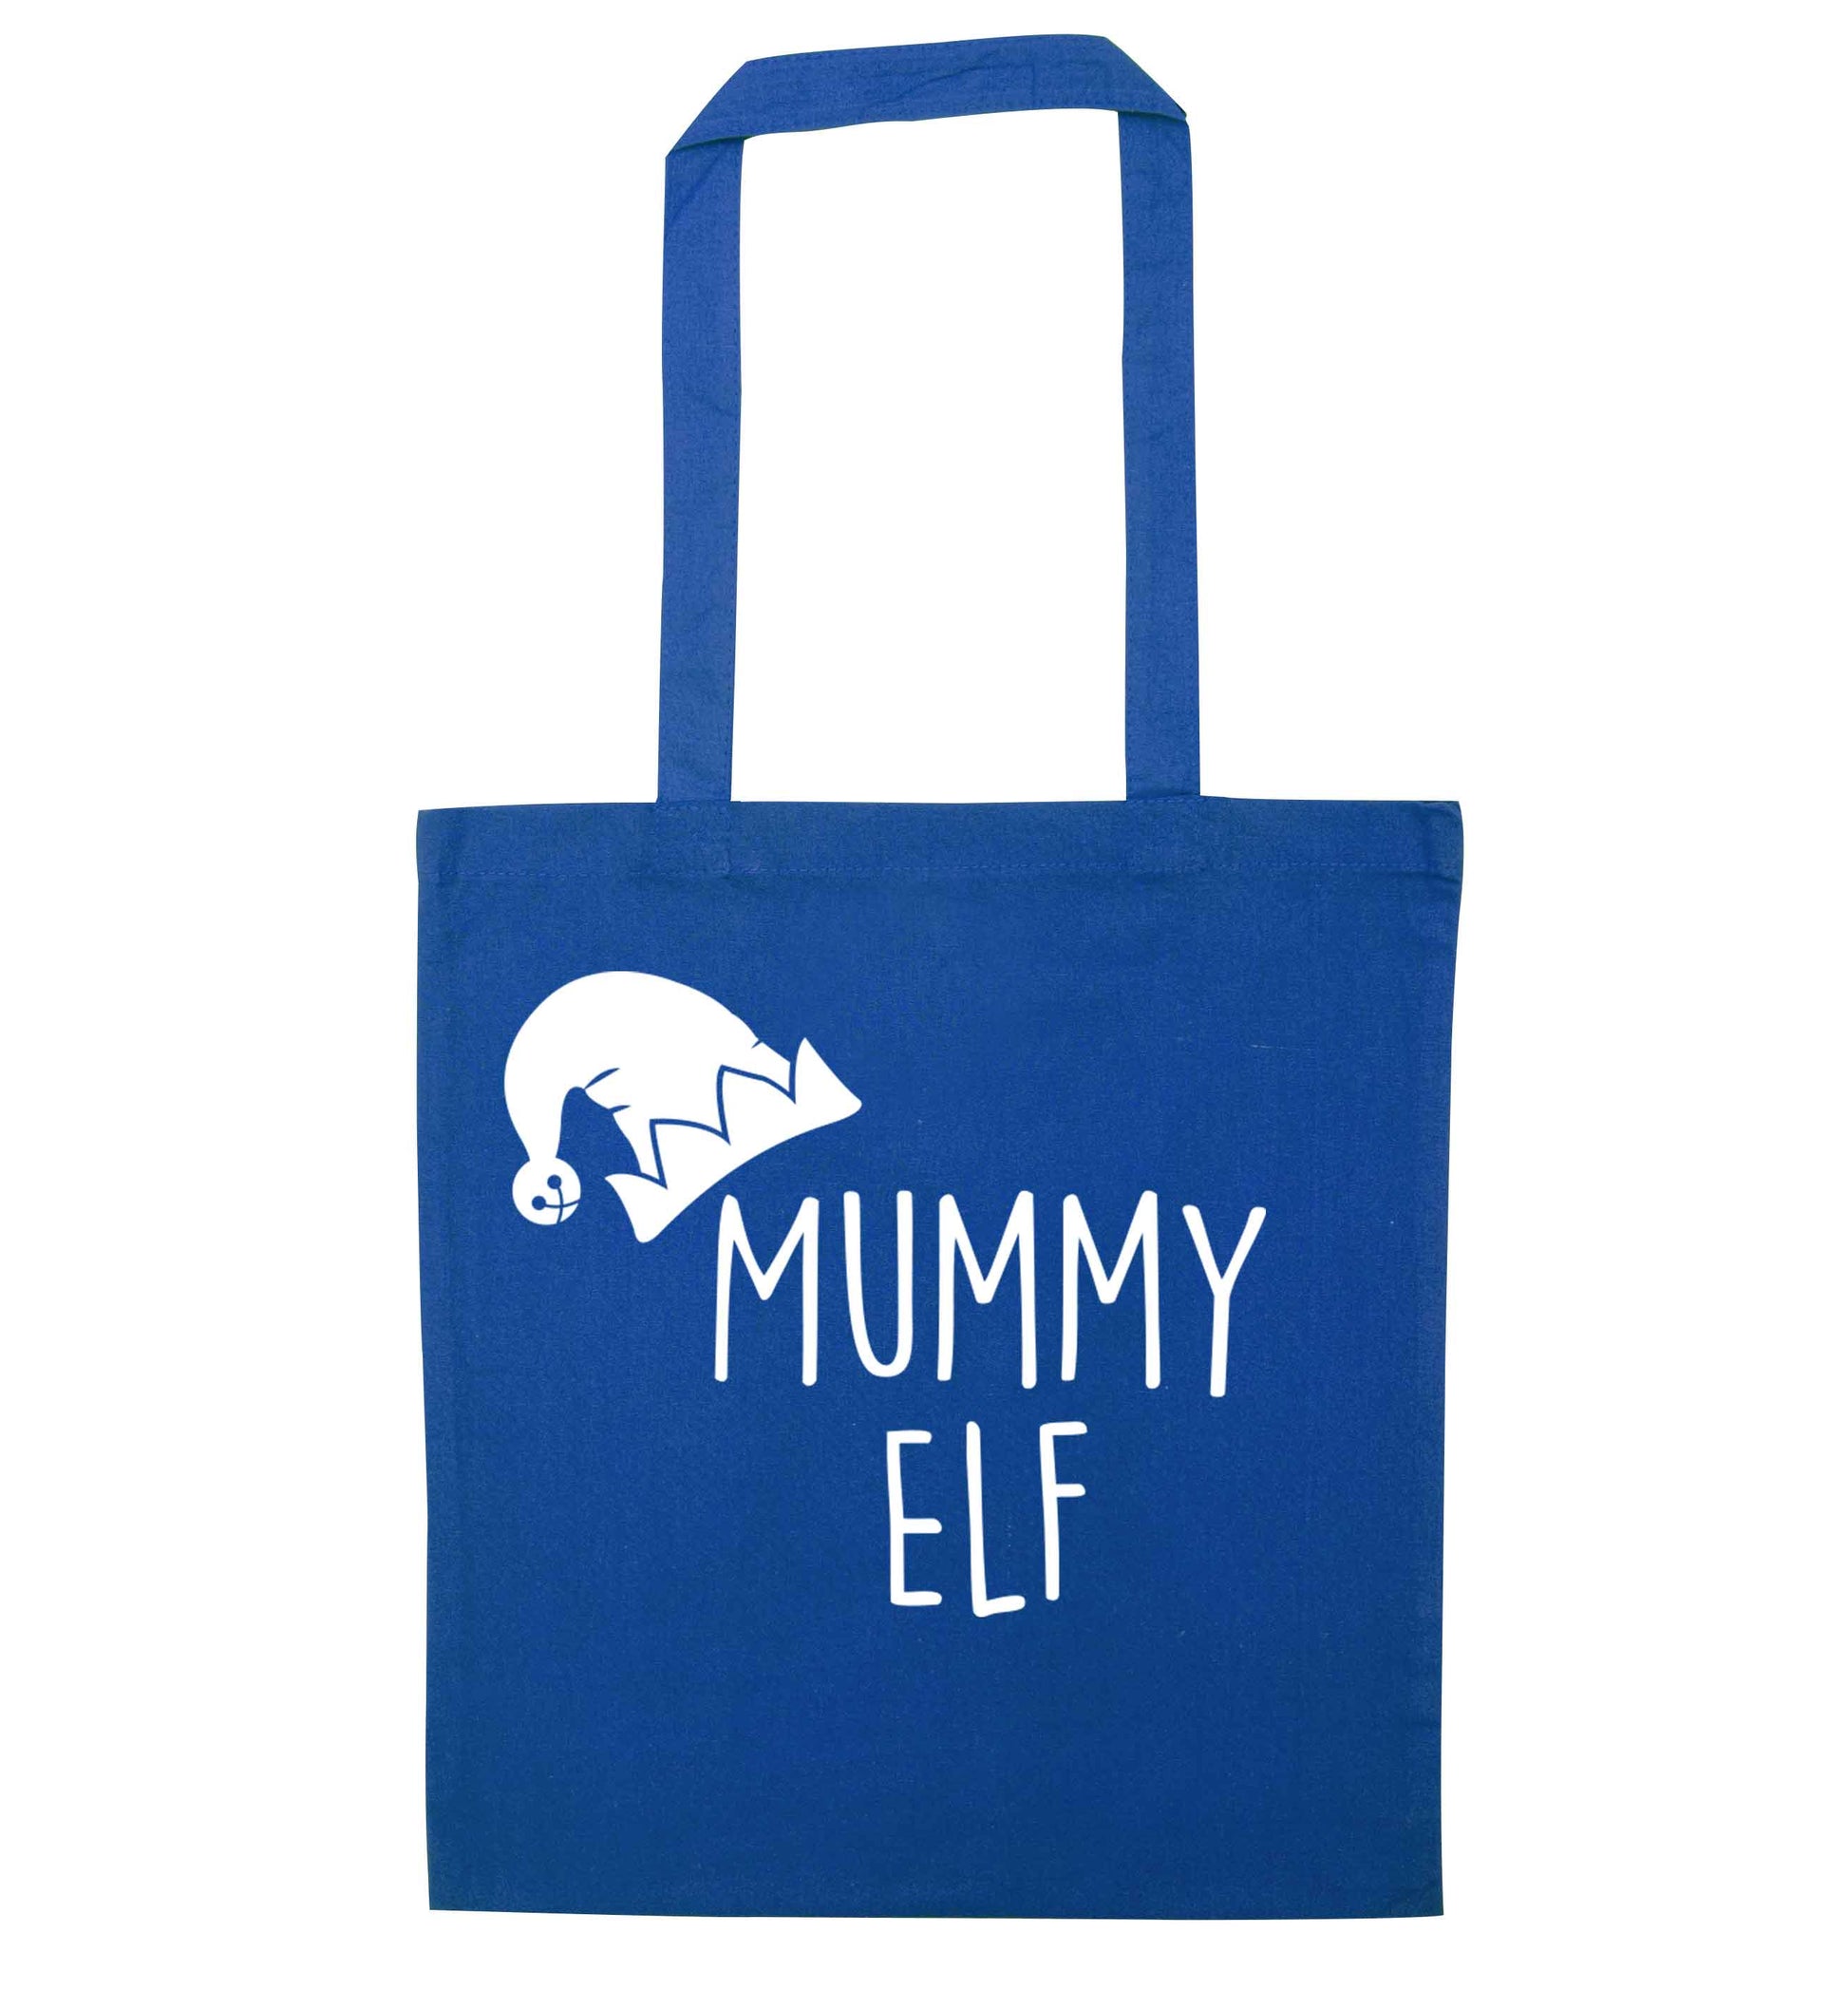 Mummy elf blue tote bag